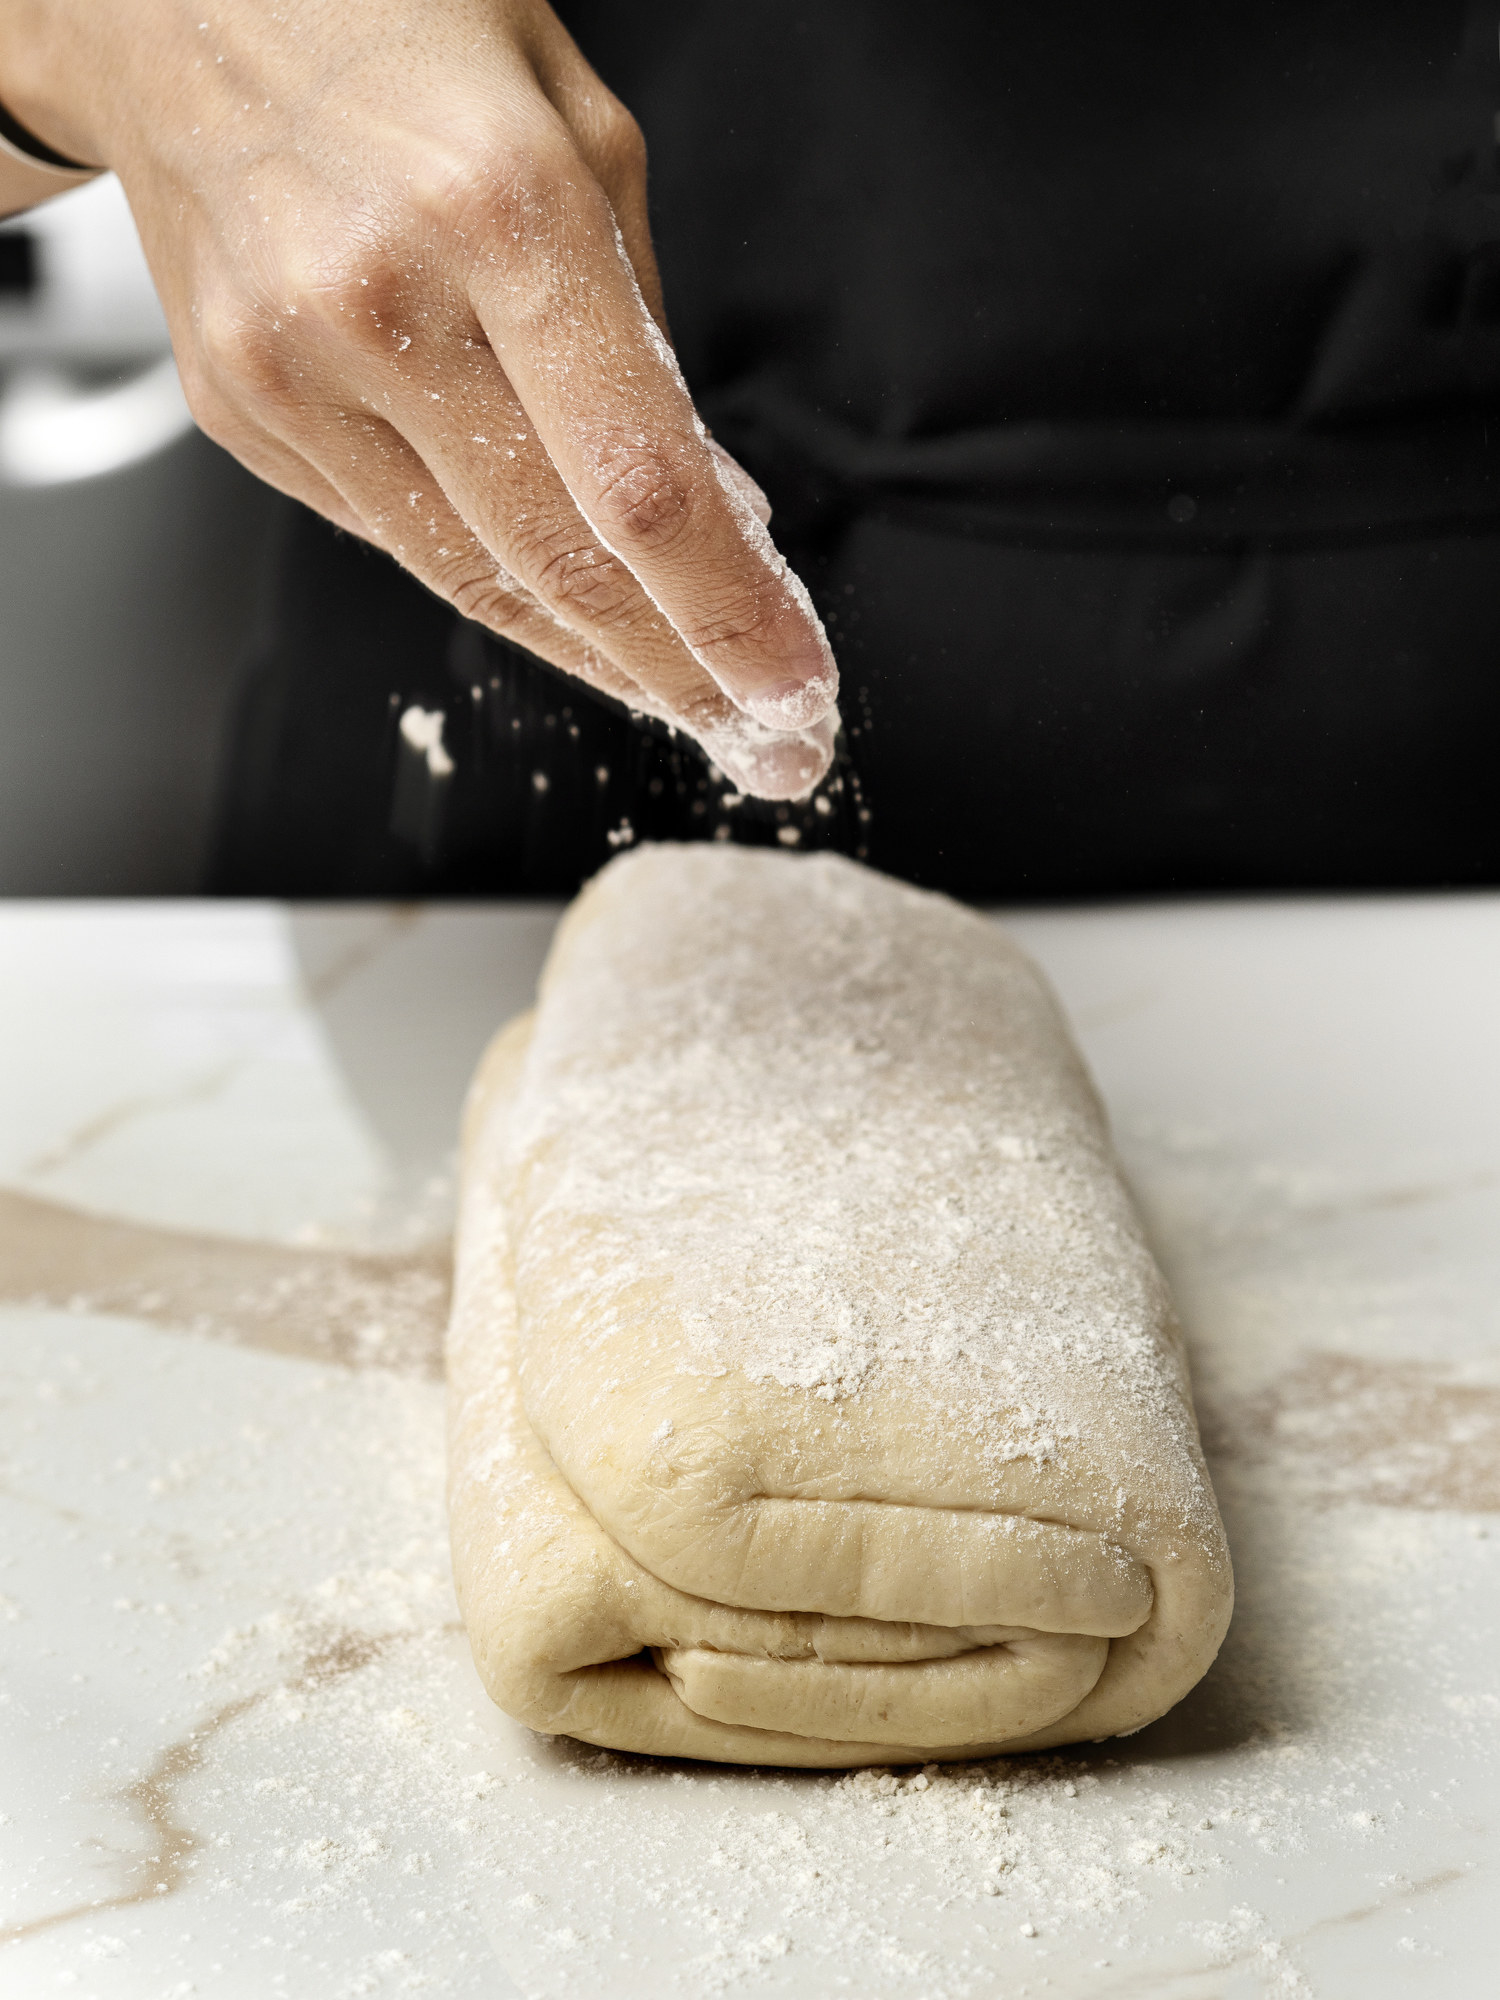 A person preparing croissant dough.